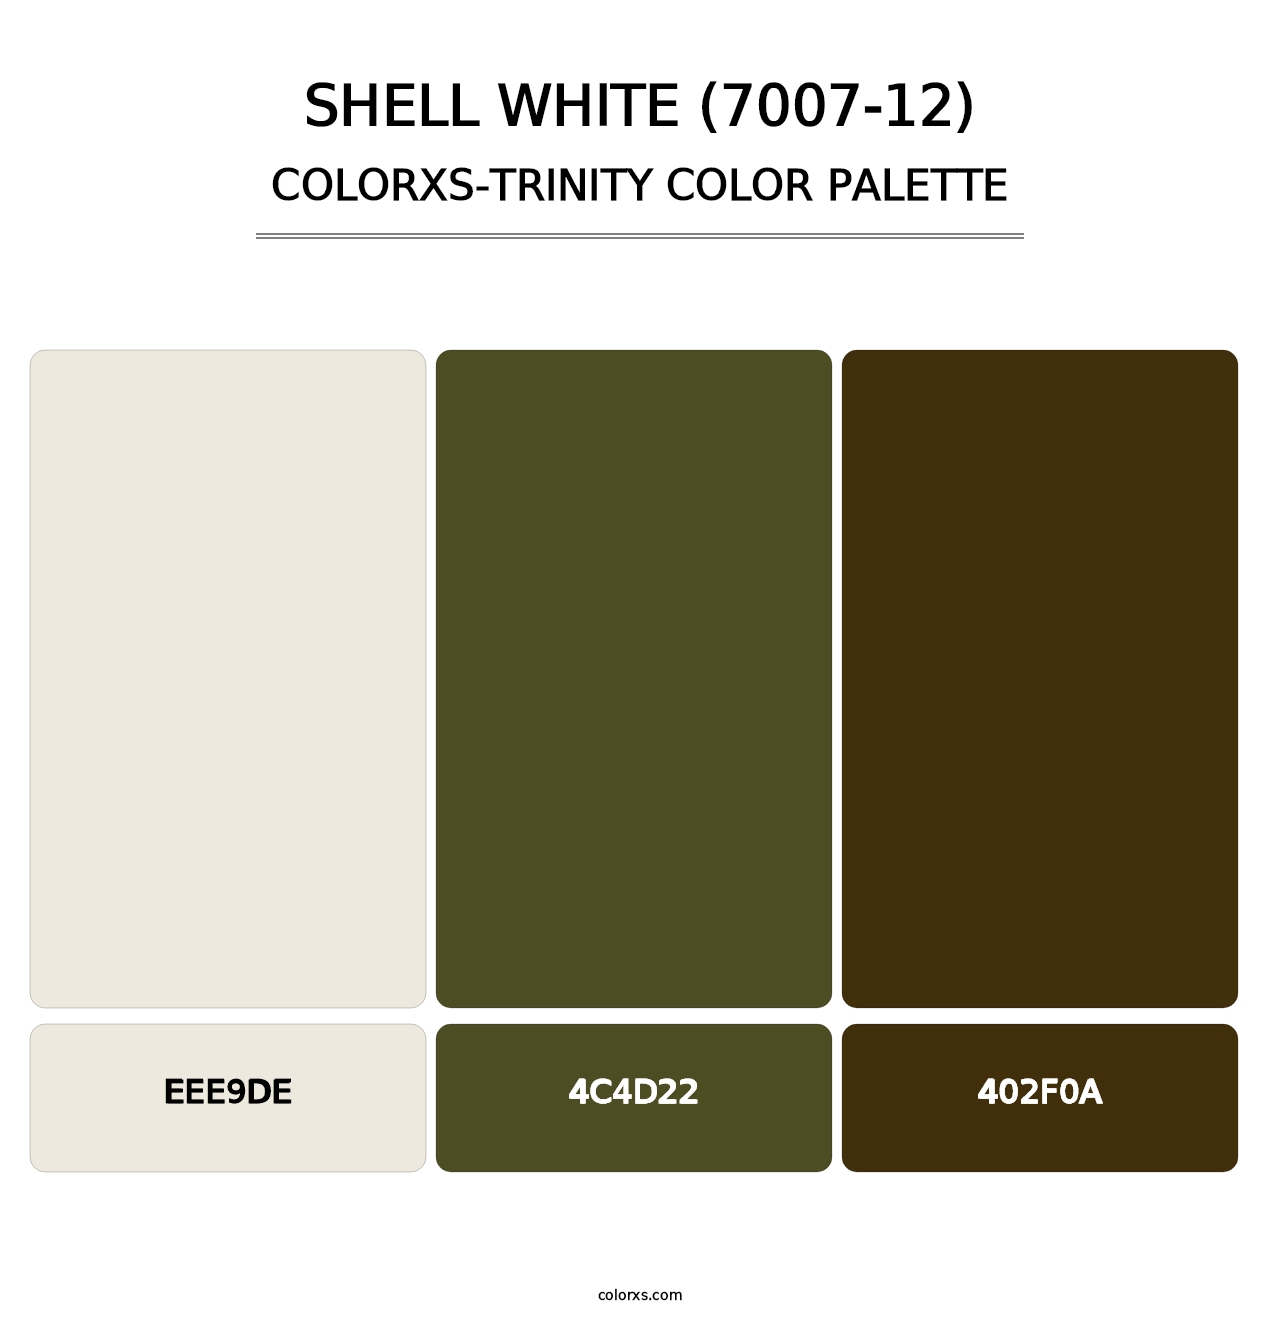 Shell White (7007-12) - Colorxs Trinity Palette